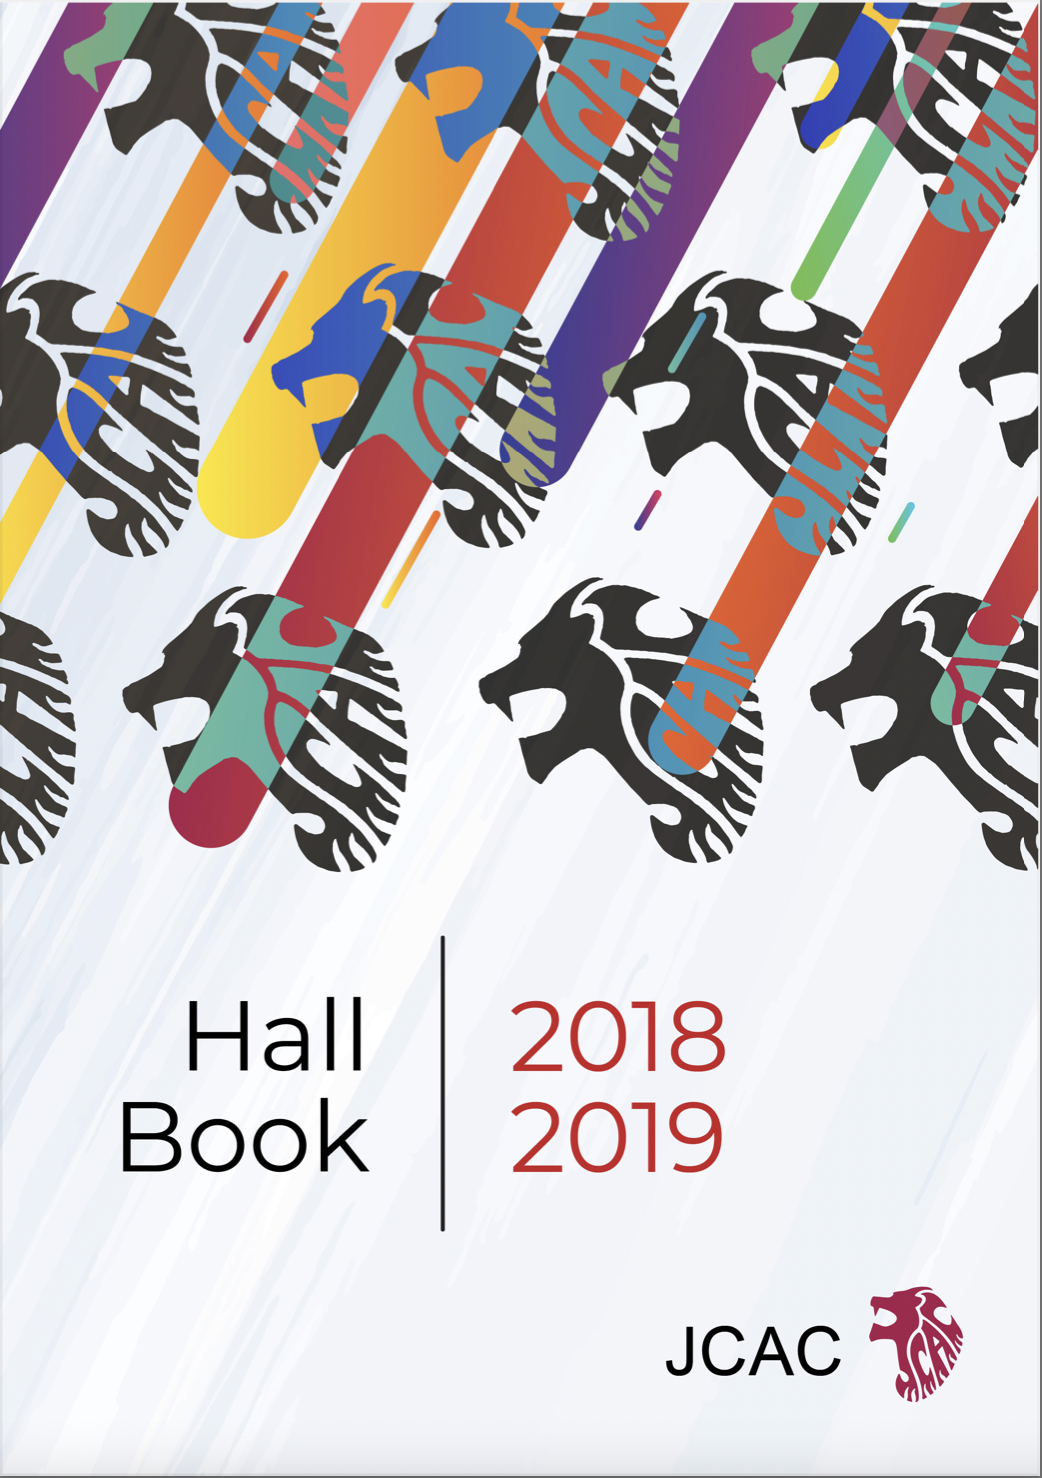 JCAC Hall book 2018-2019